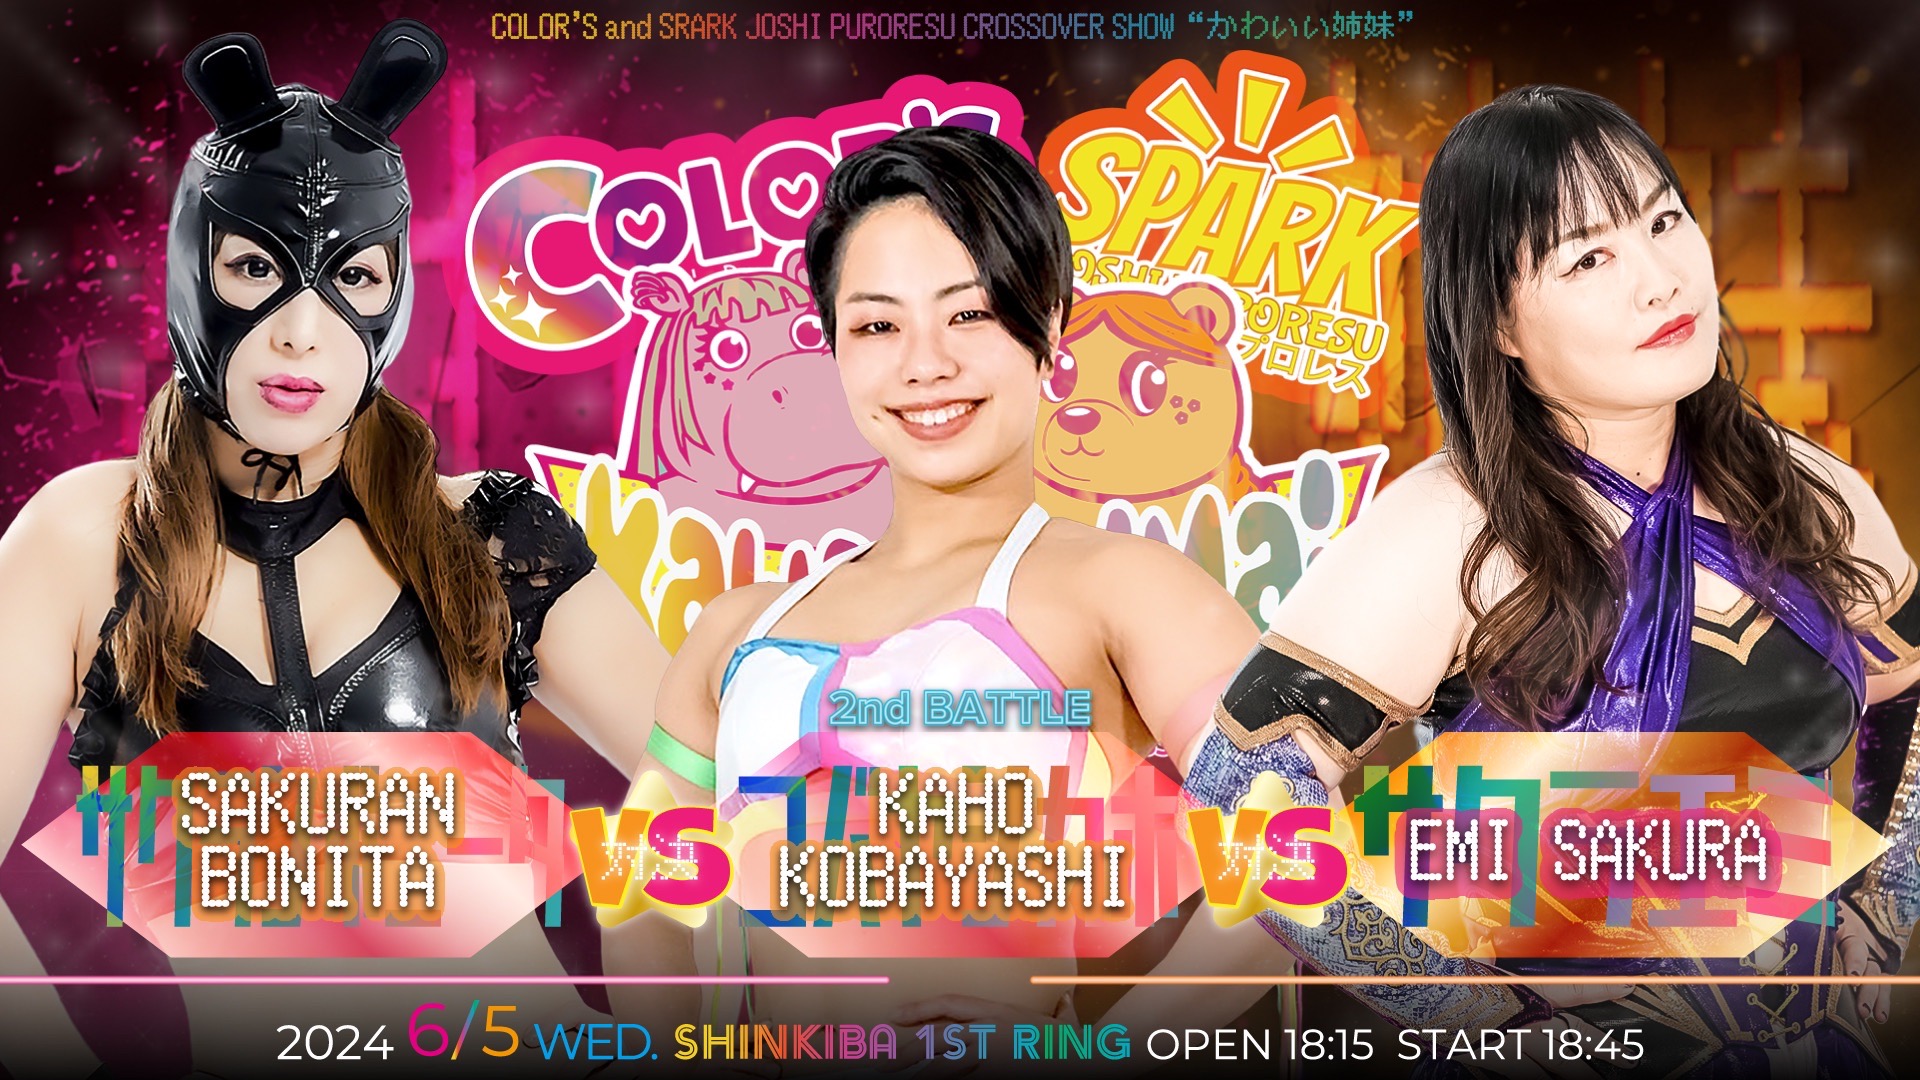 Sakura Bonita vs Kaho Kobayashi vs Emi Sakura at COLORS x Spark Joshi